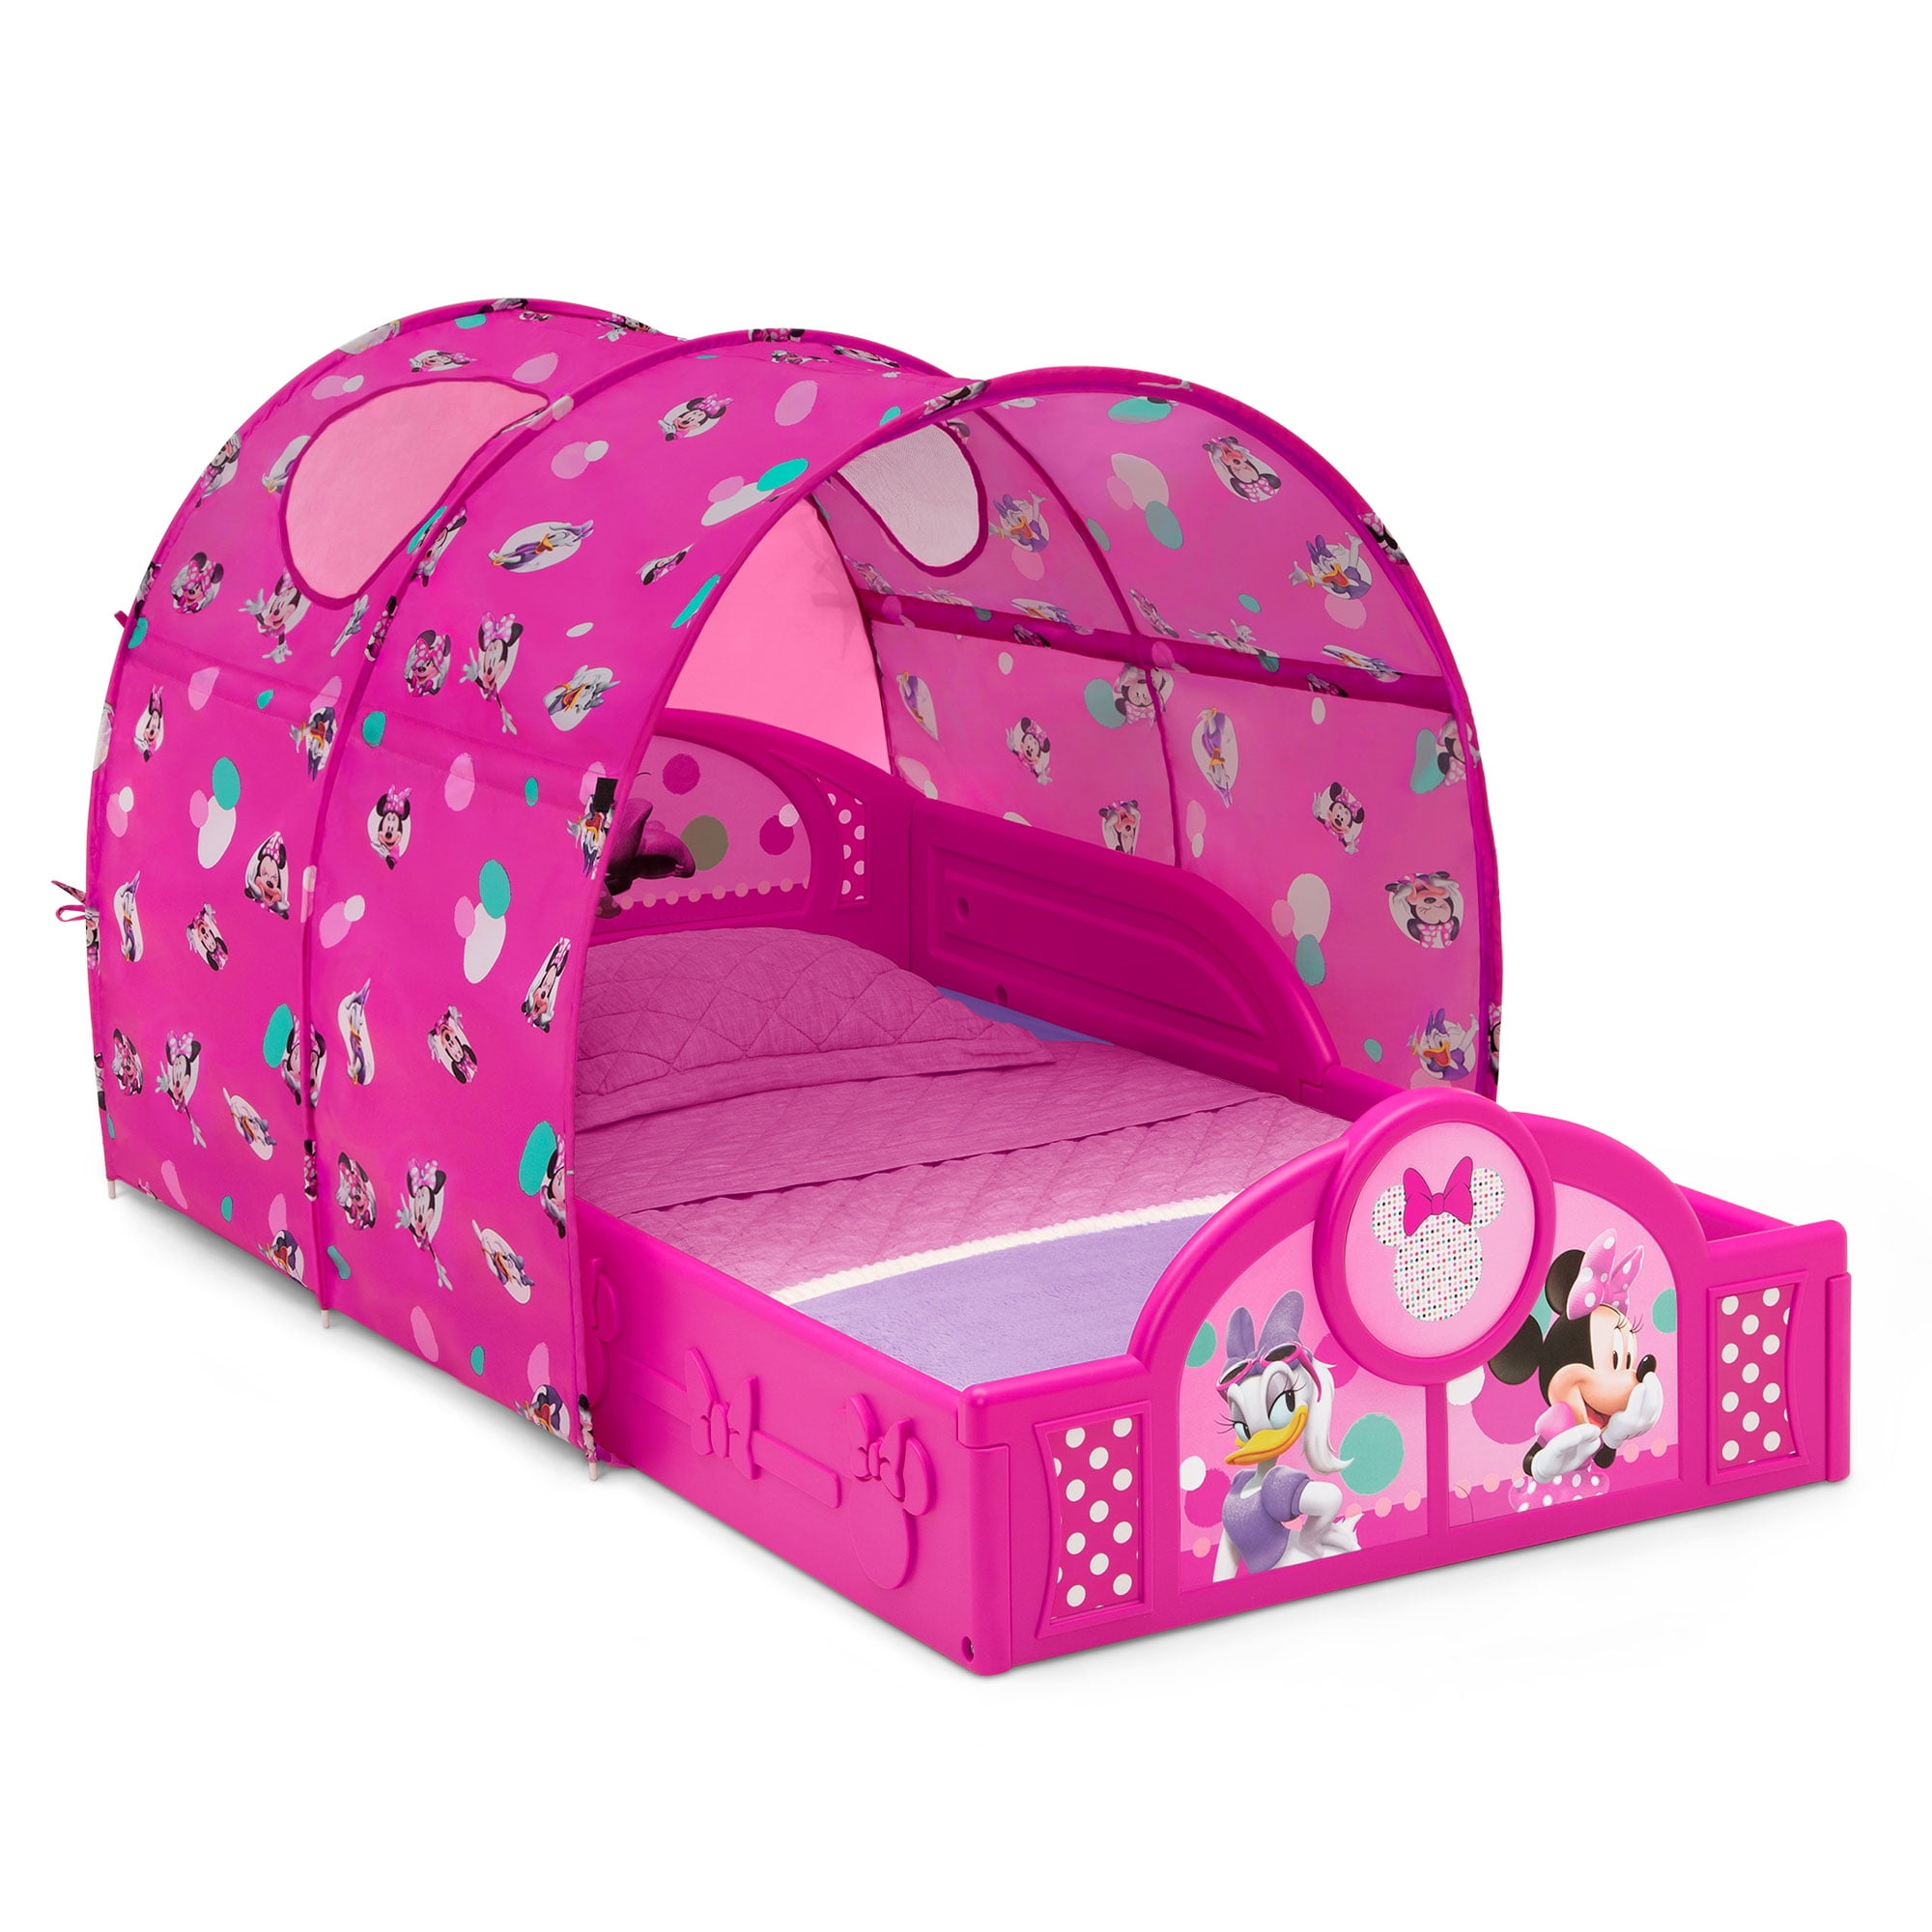 Disney Toddler Bed Frame Minnie Mouse Child Crib Kid Safe Rail Bedroom Furniture 